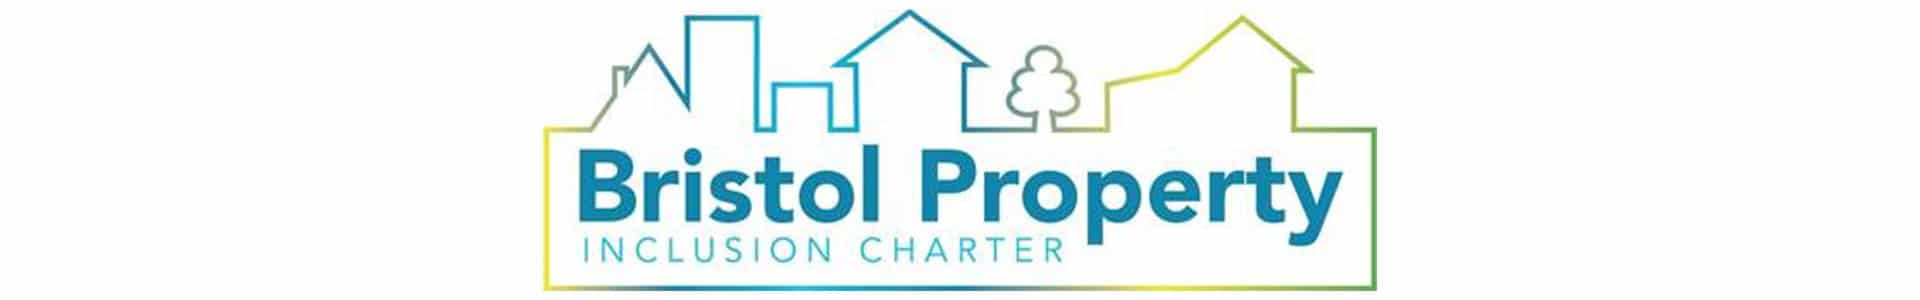 Bristol property inclusion charter logo